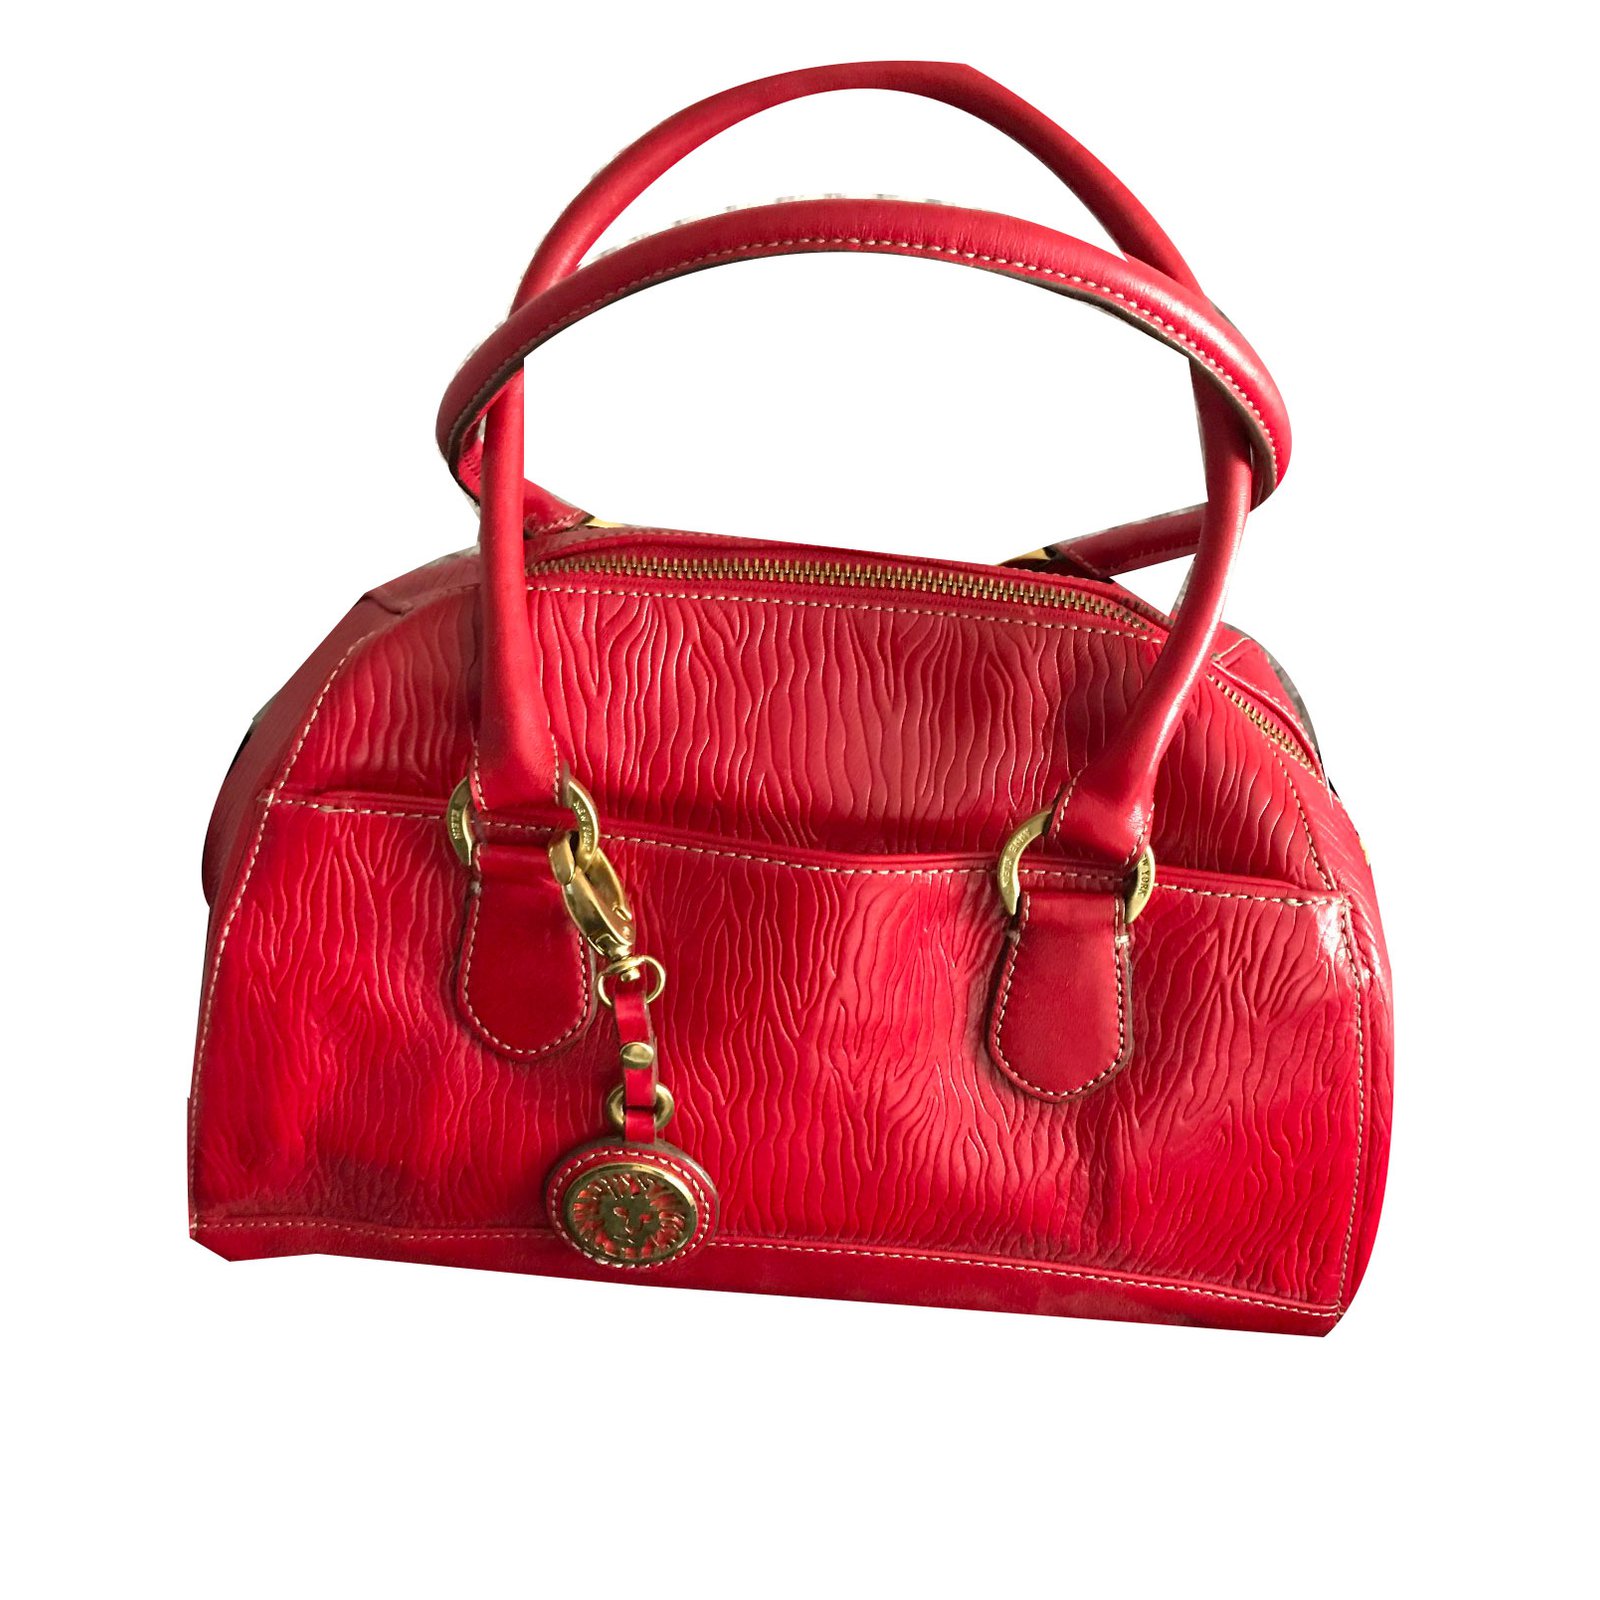 genuine leather anne klein dome handbag red